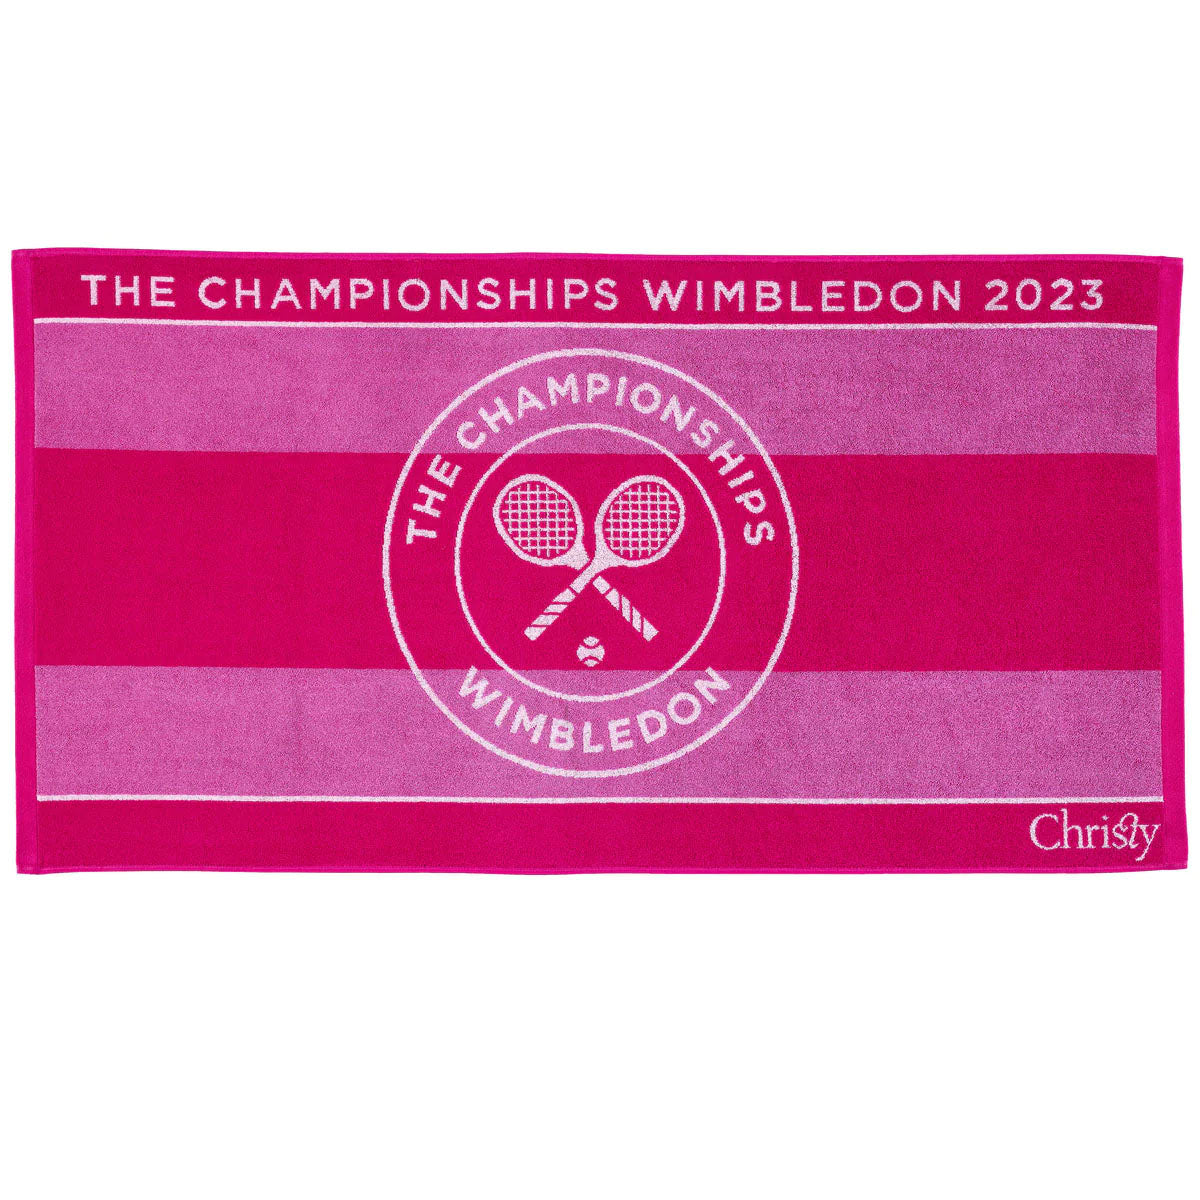 Wimbledon Championship 2023 Towel Review - Fitness Equipment Hub